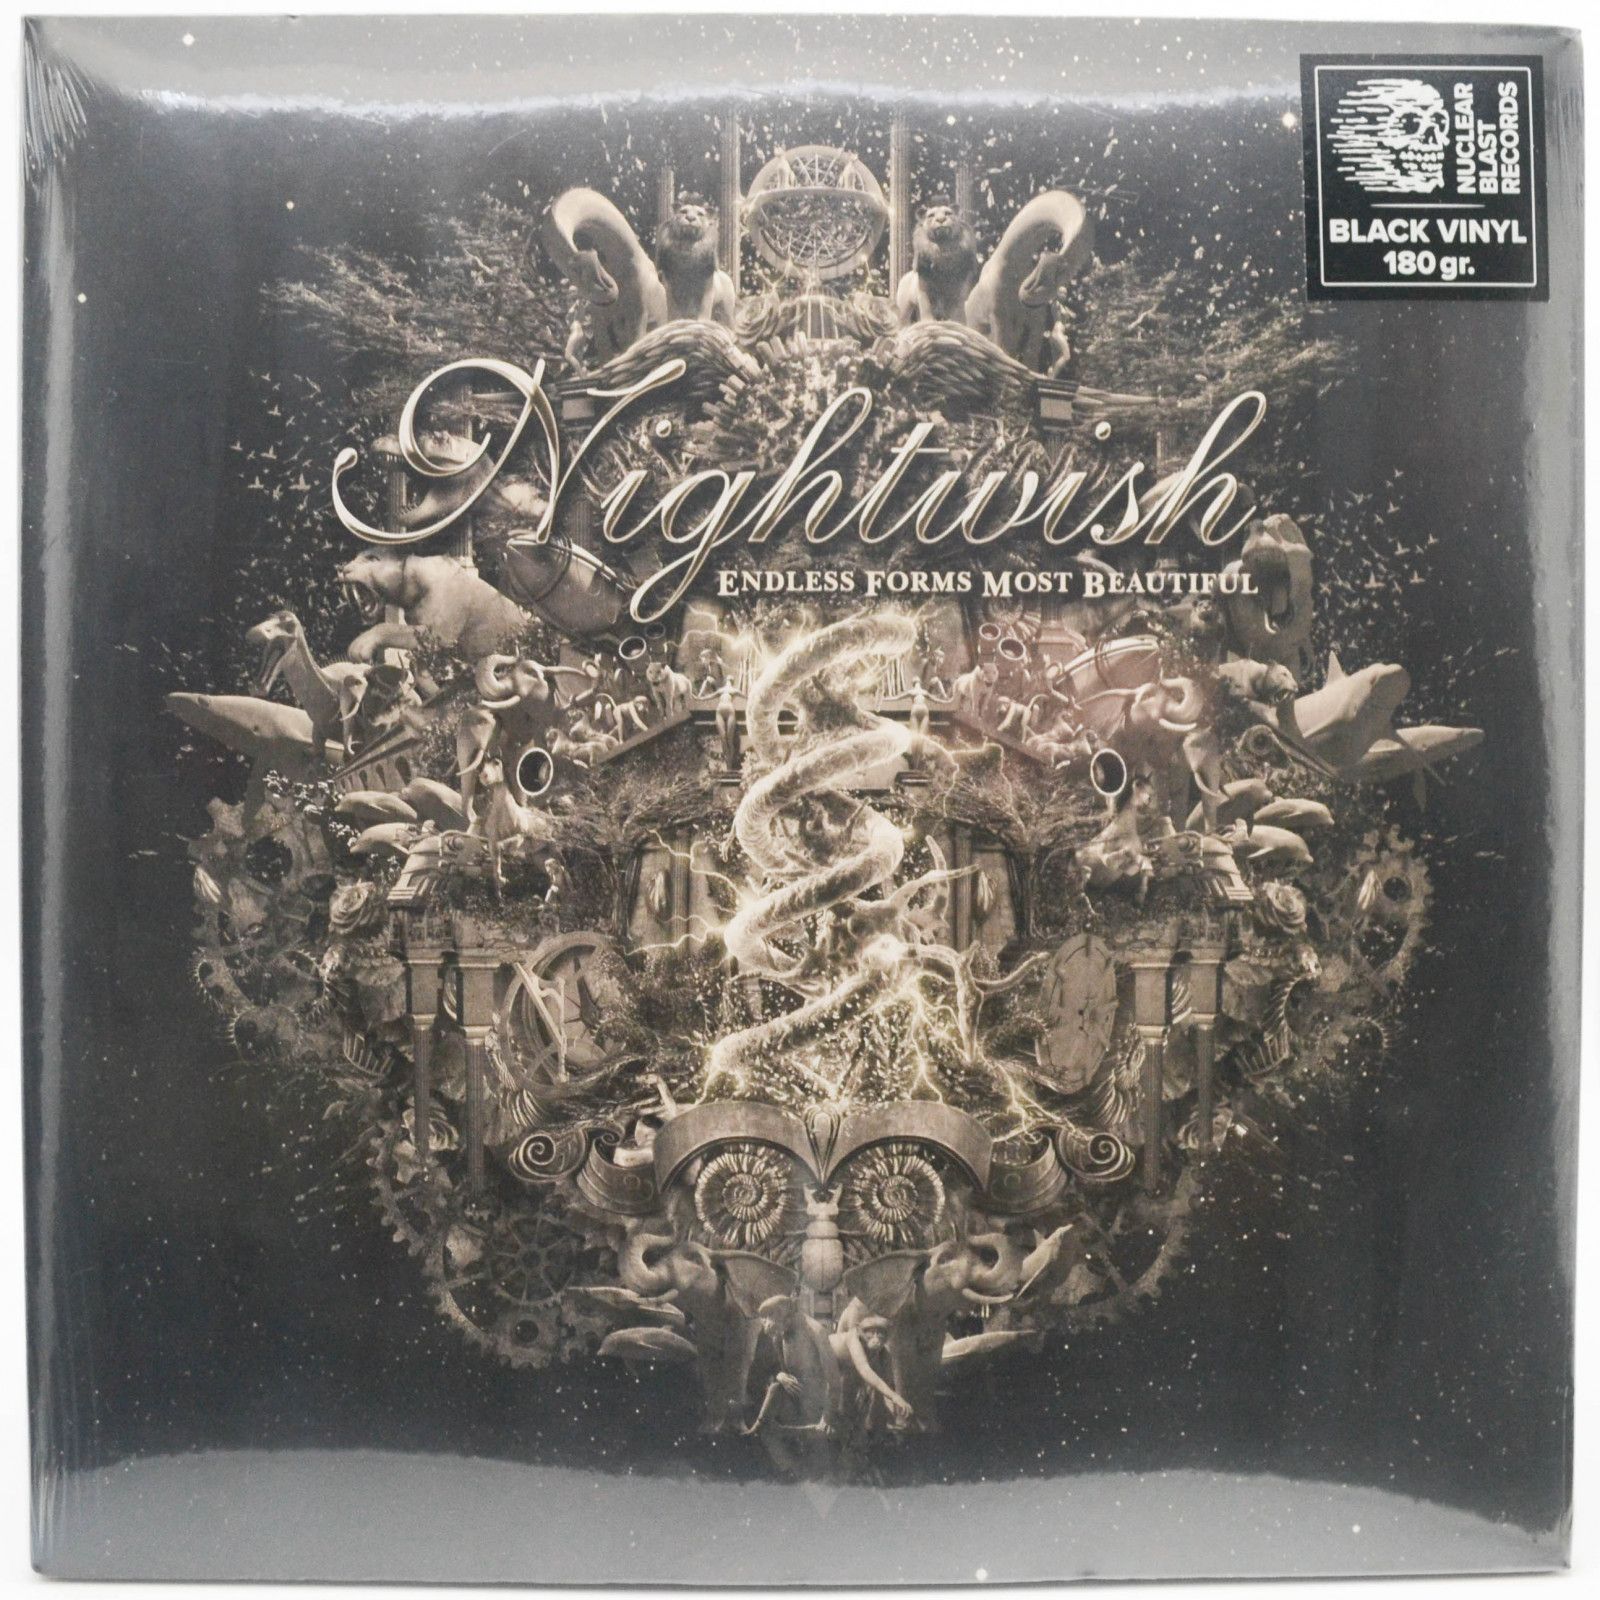 Nightwish — Endless Forms Most Beautiful (2LP), 2015